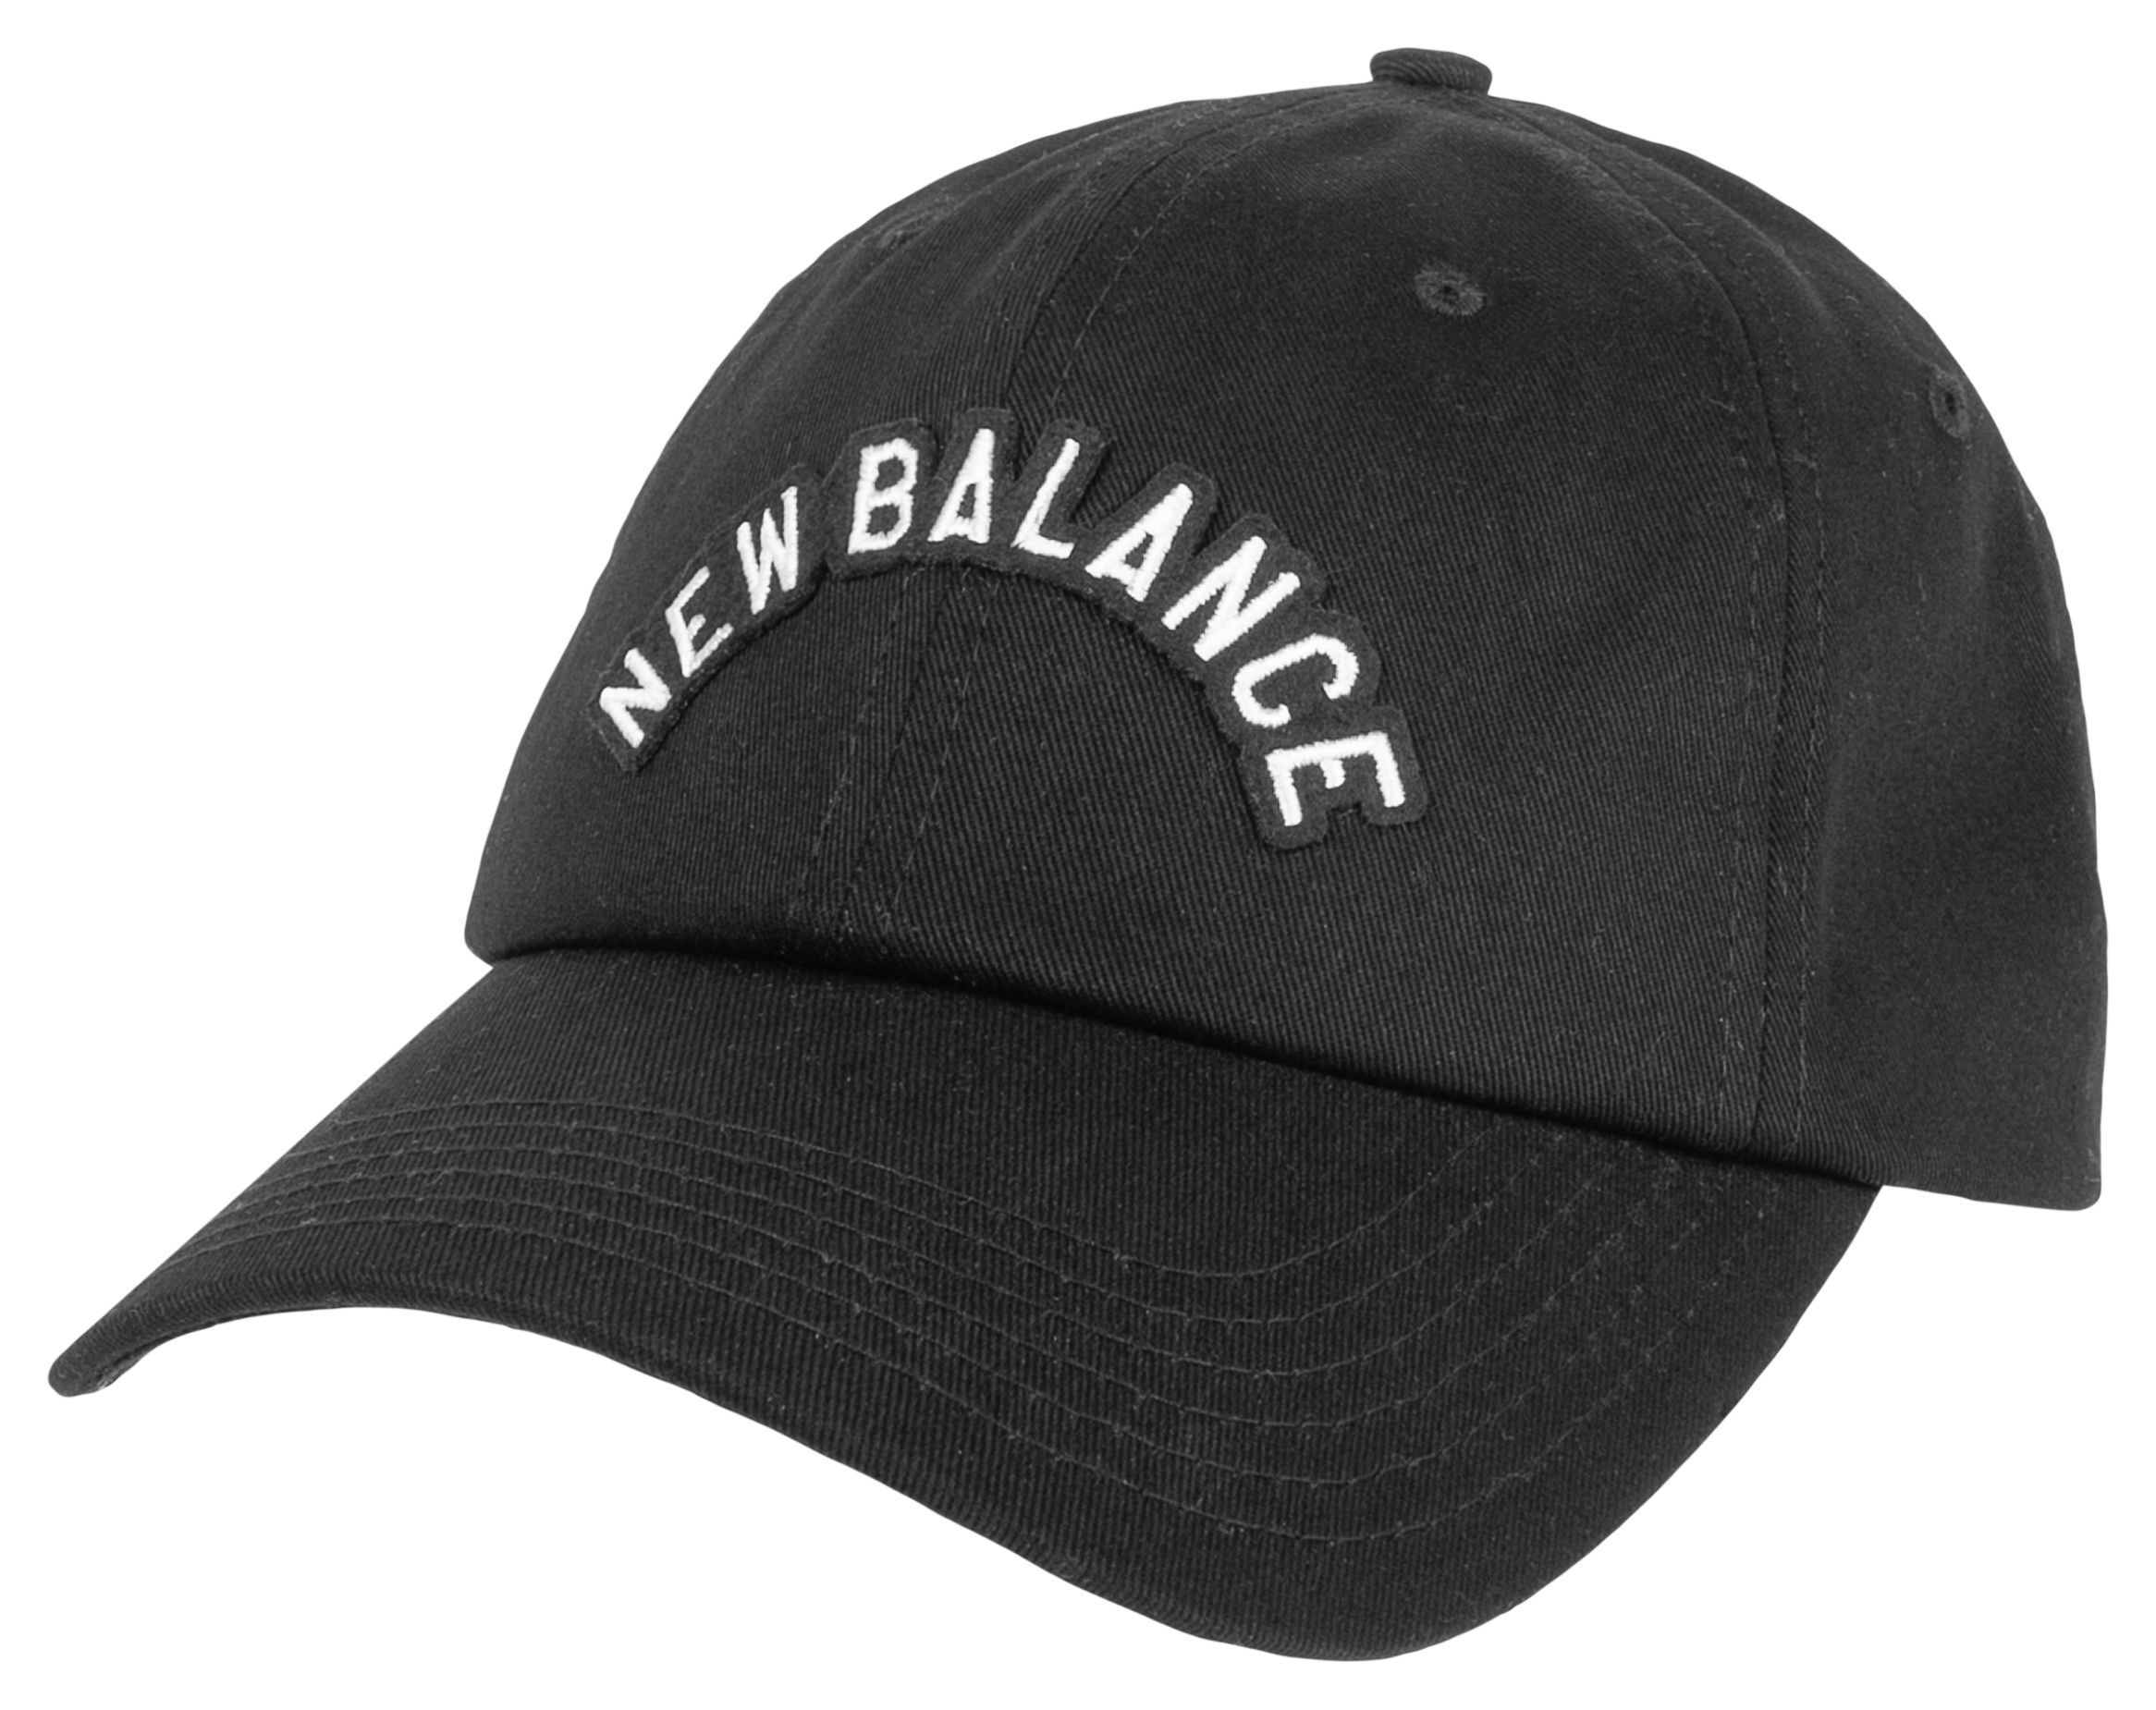 Men's Running Gloves & Hats - New Balance